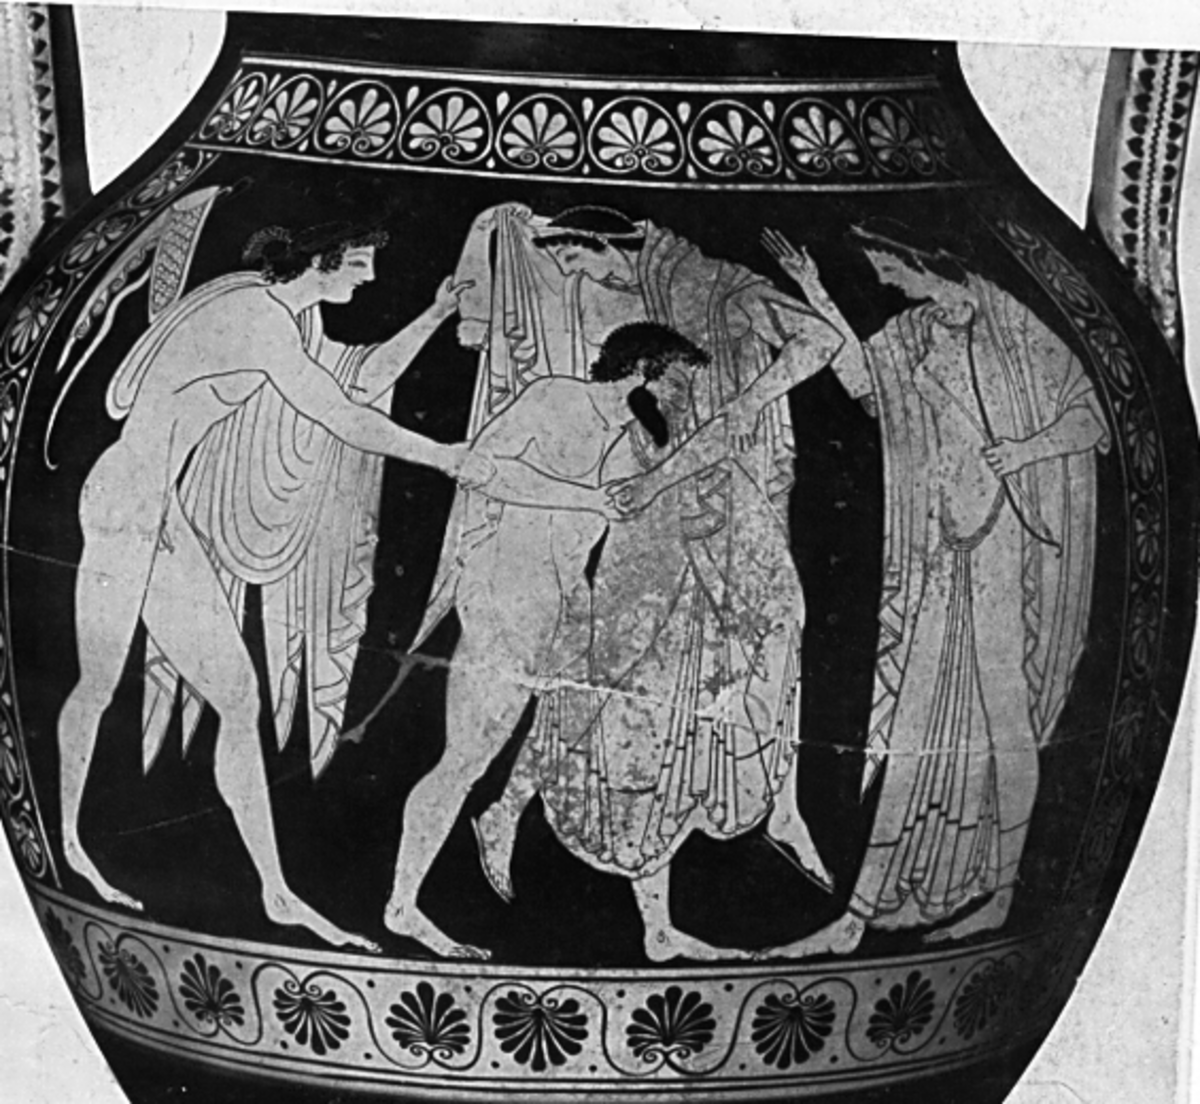 Apollo and Artemis fighting Tityos to save their mother Leto